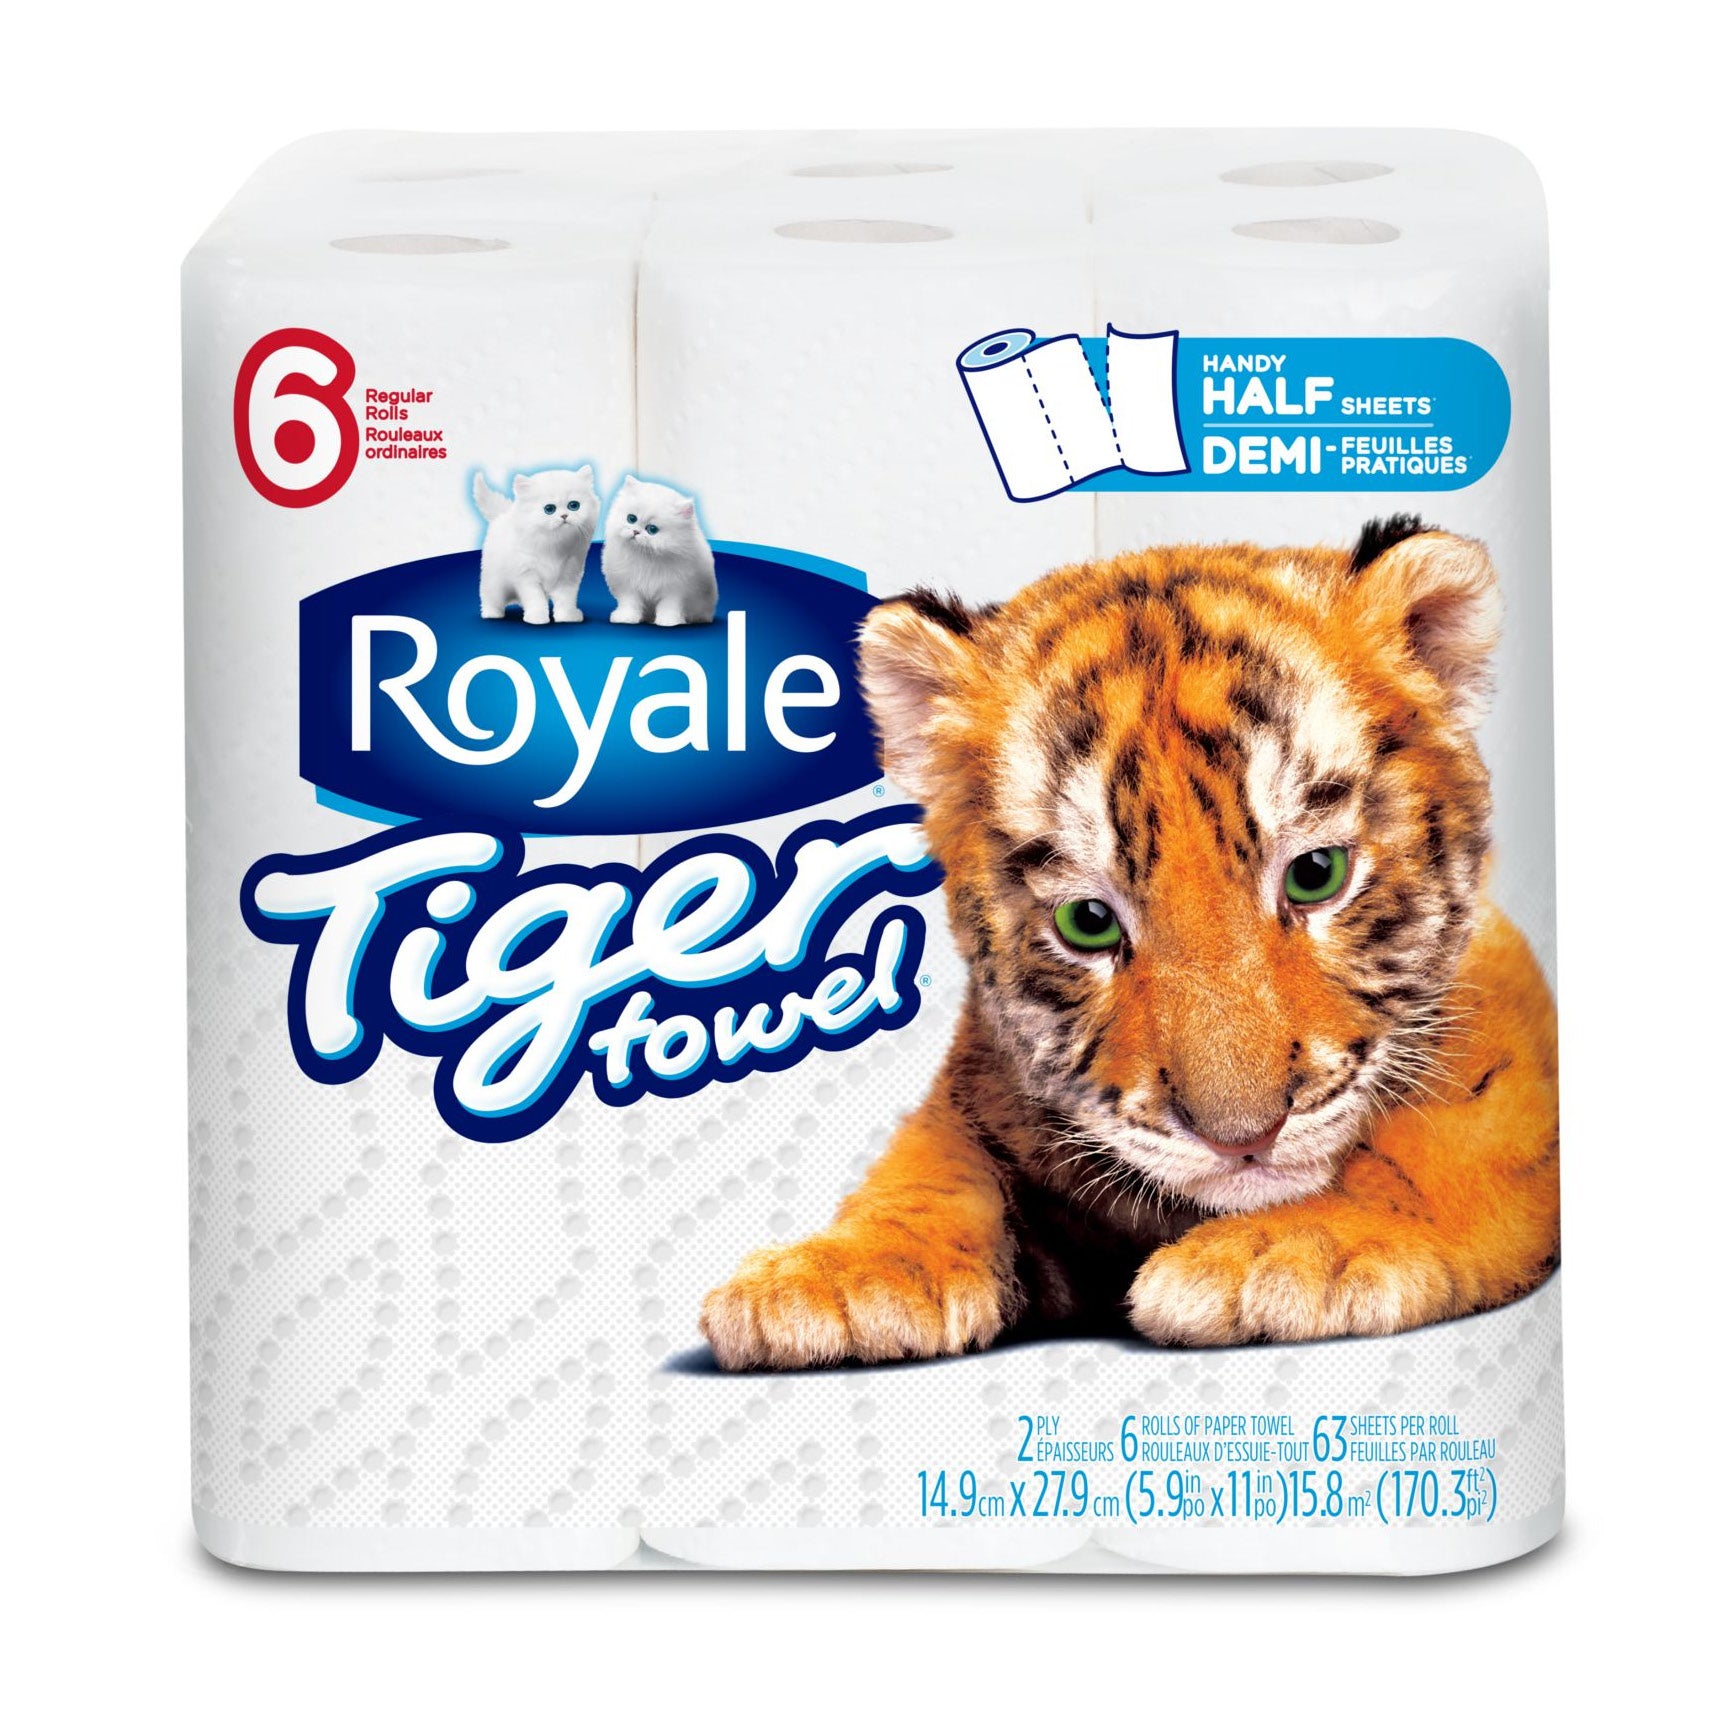 Royale Tiger Strong Paper Towel, 2-Ply, Handy Half-Sheets, 6pk